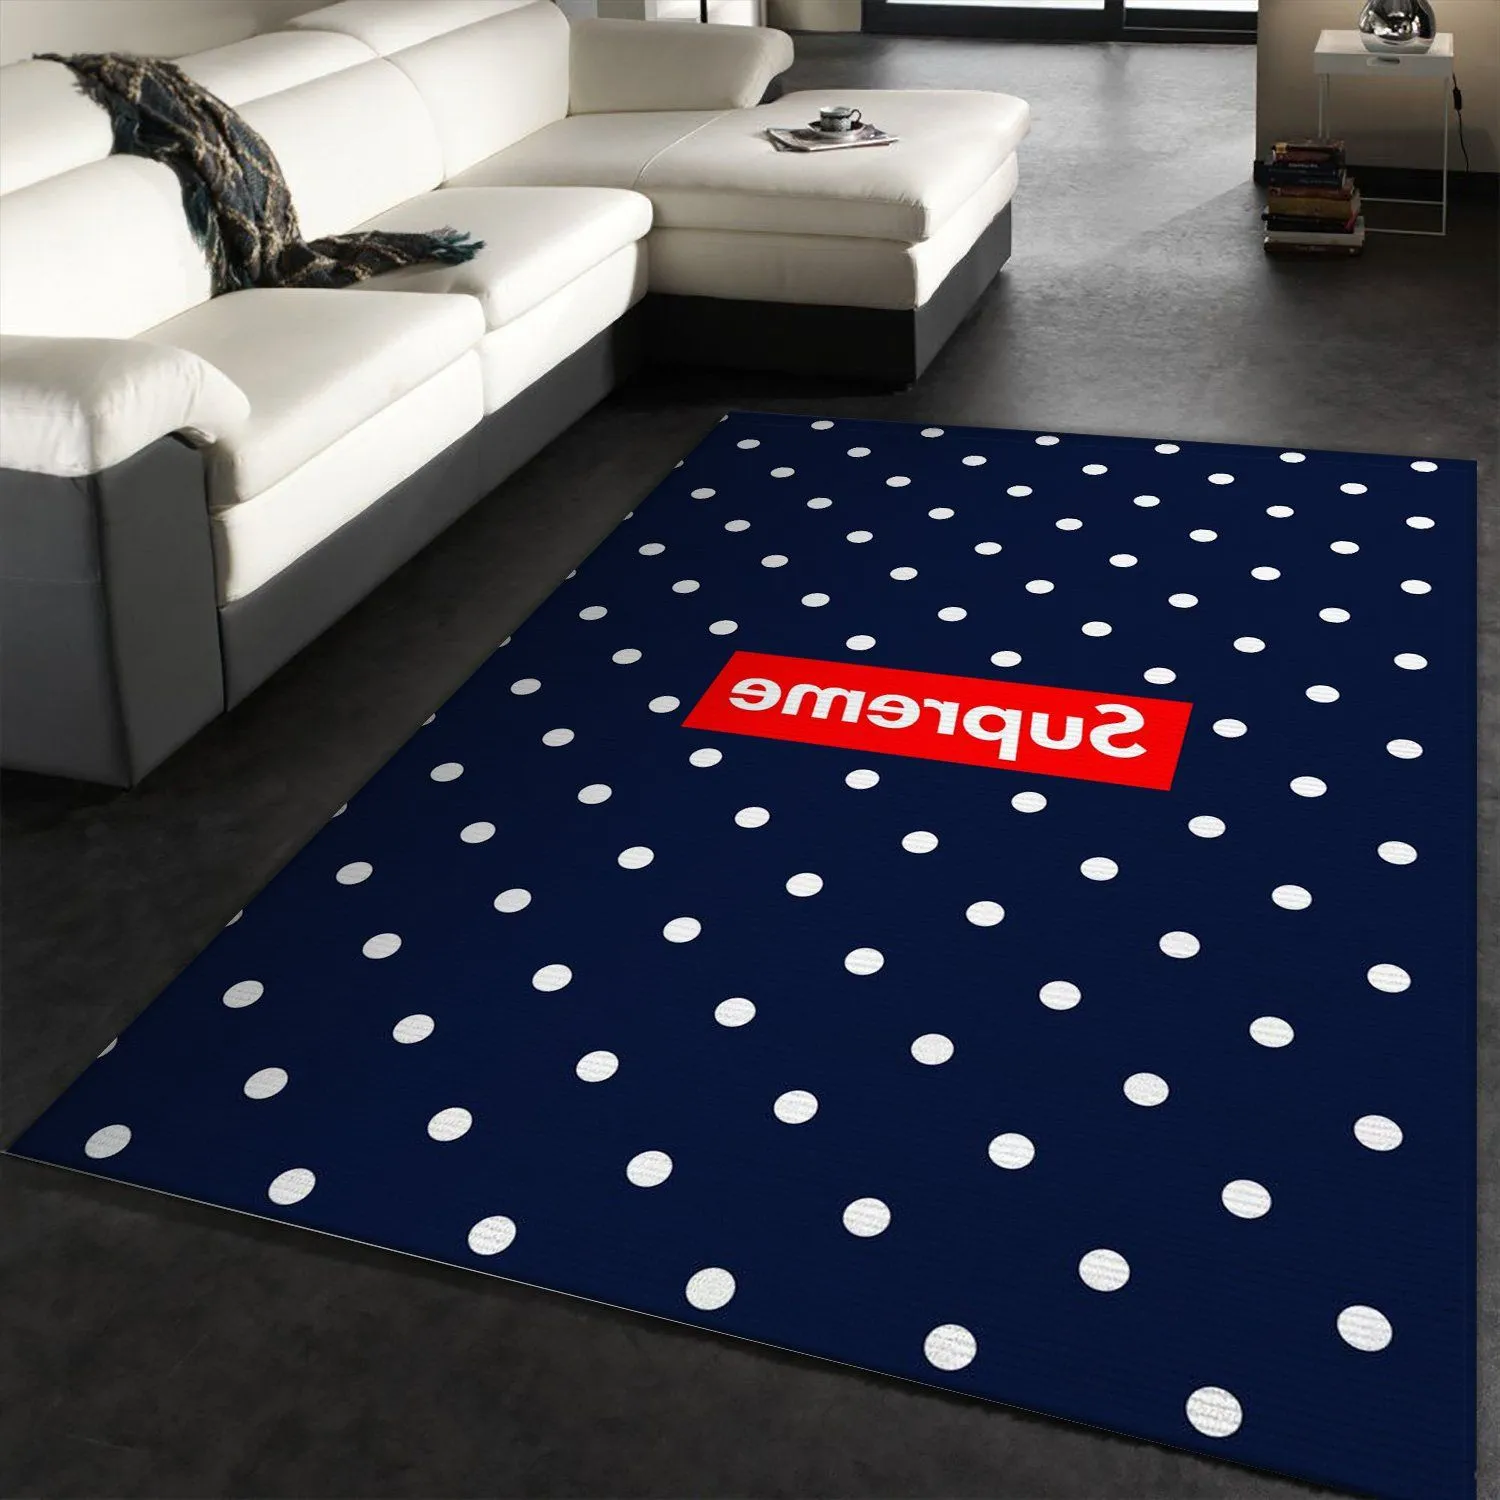 Supreme x cdg s Rectangle Rug Area Carpet Home Decor Door Mat Fashion Brand Luxury